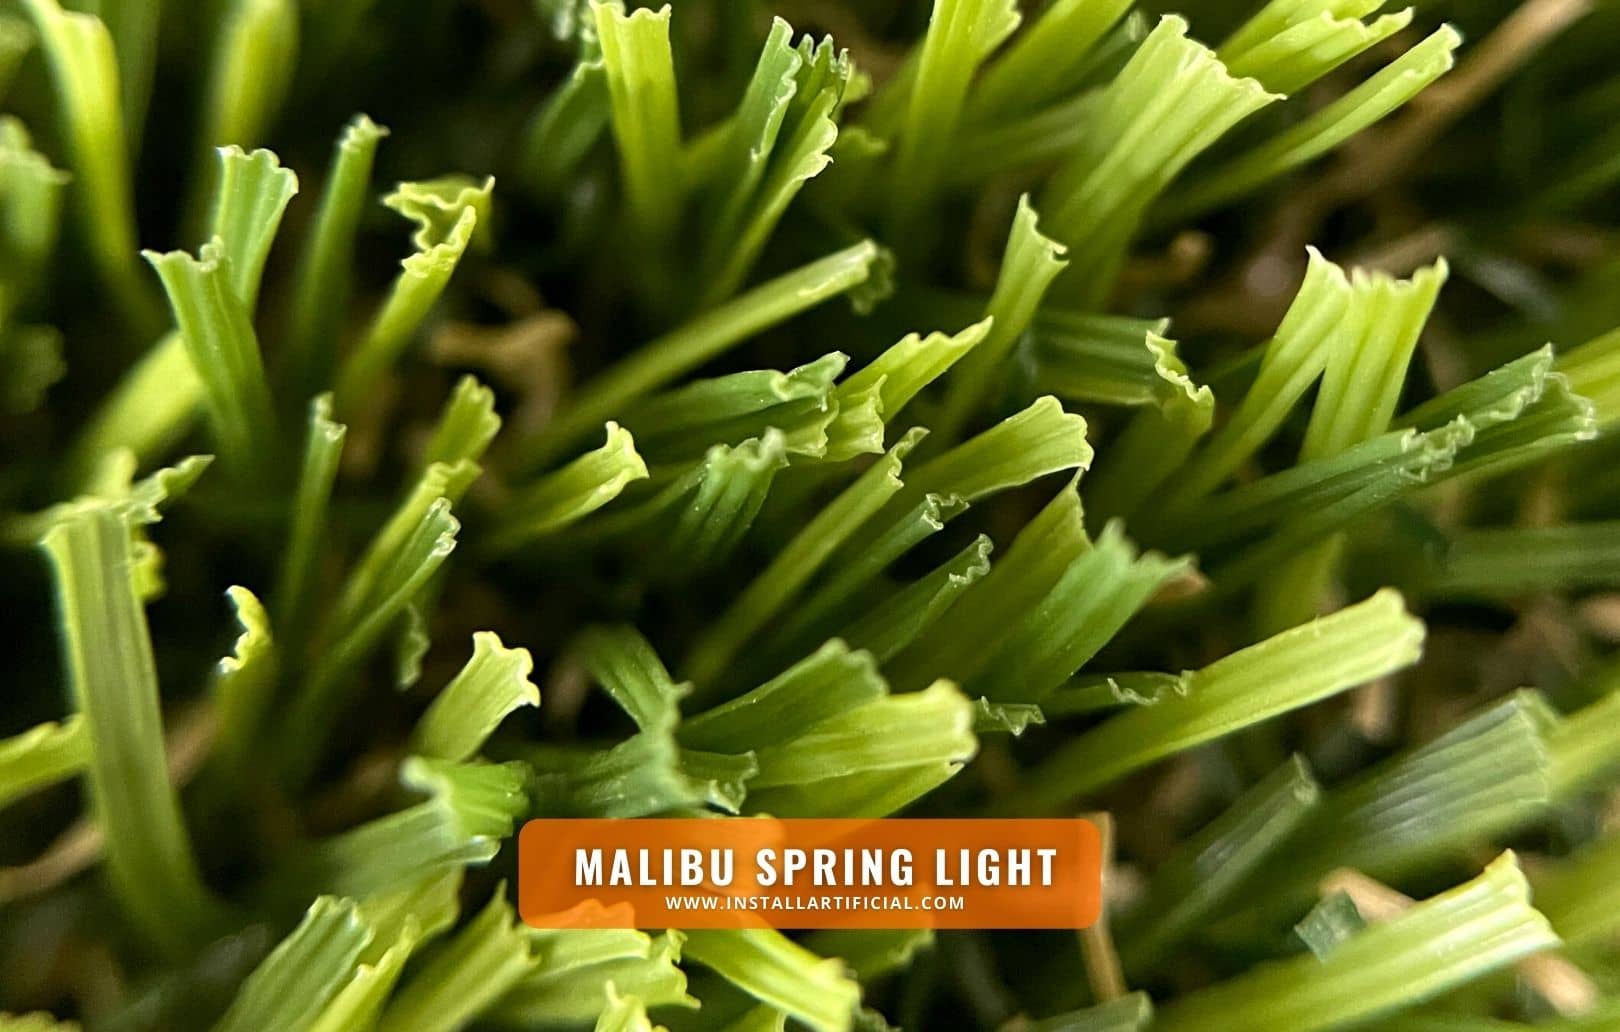 Malibu Spring Light, Tiger Turf, Synthetic Grass Warehouse, macro